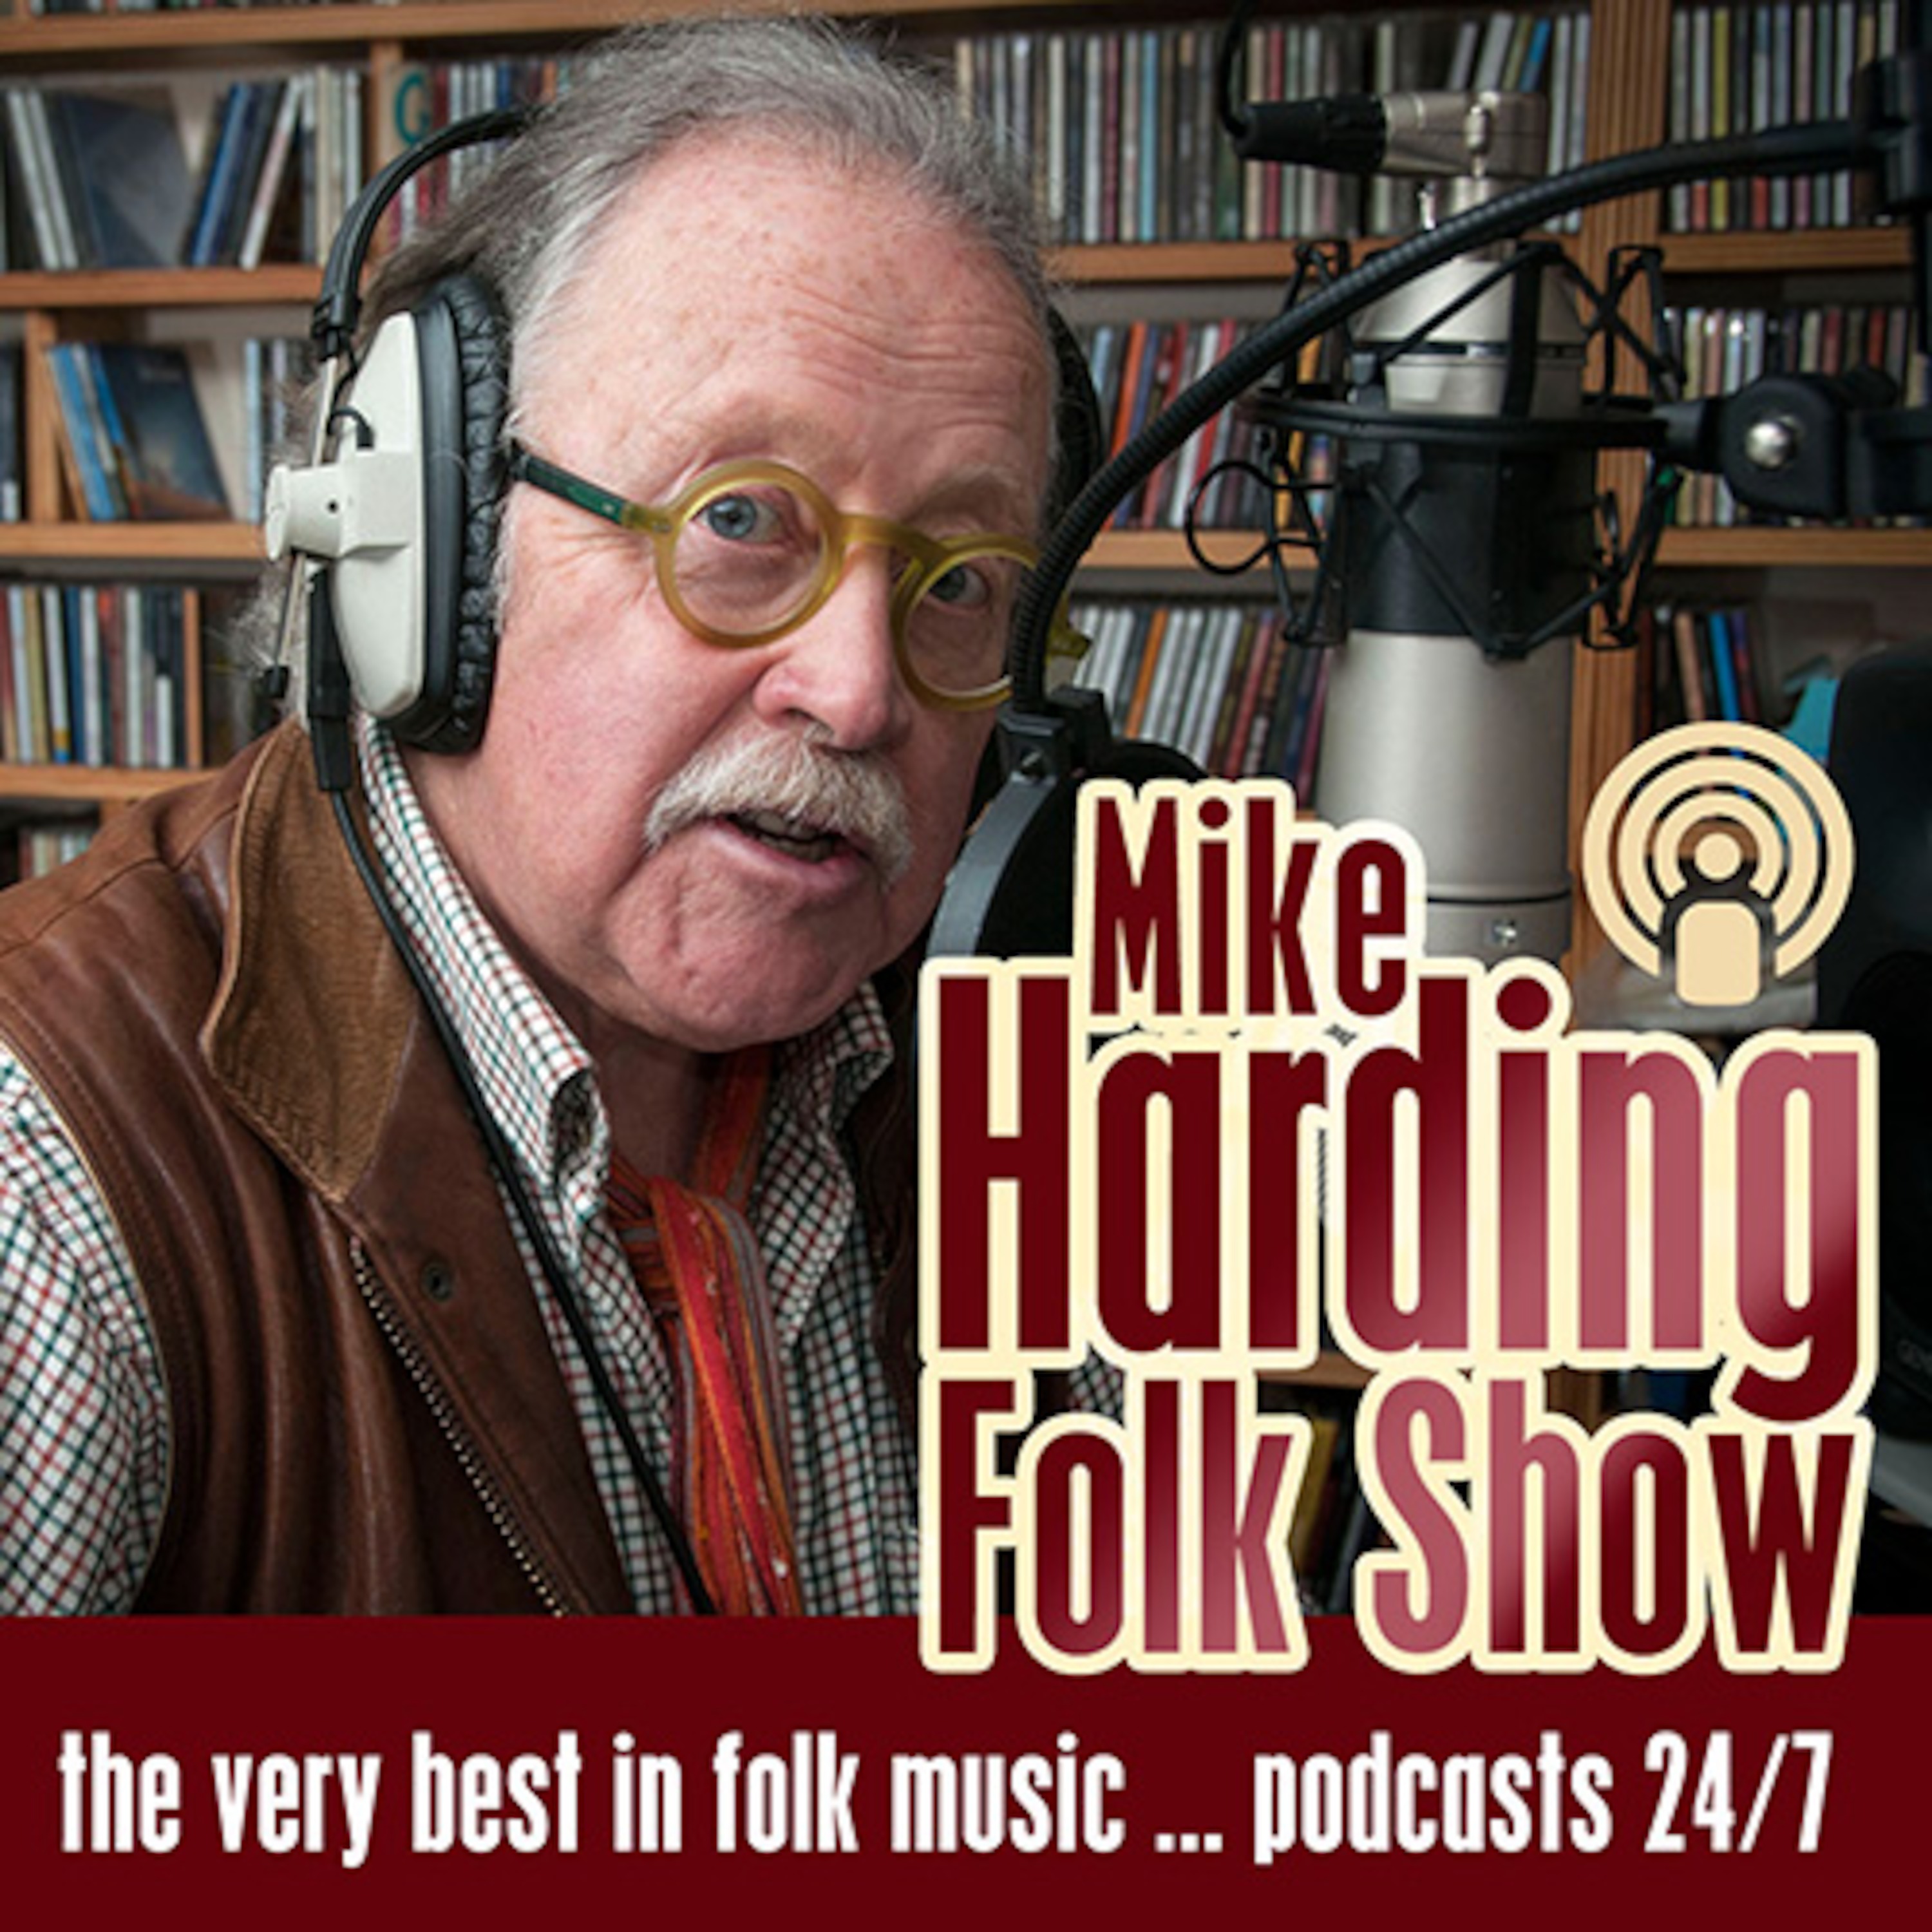 Mike Harding Folk Show 56